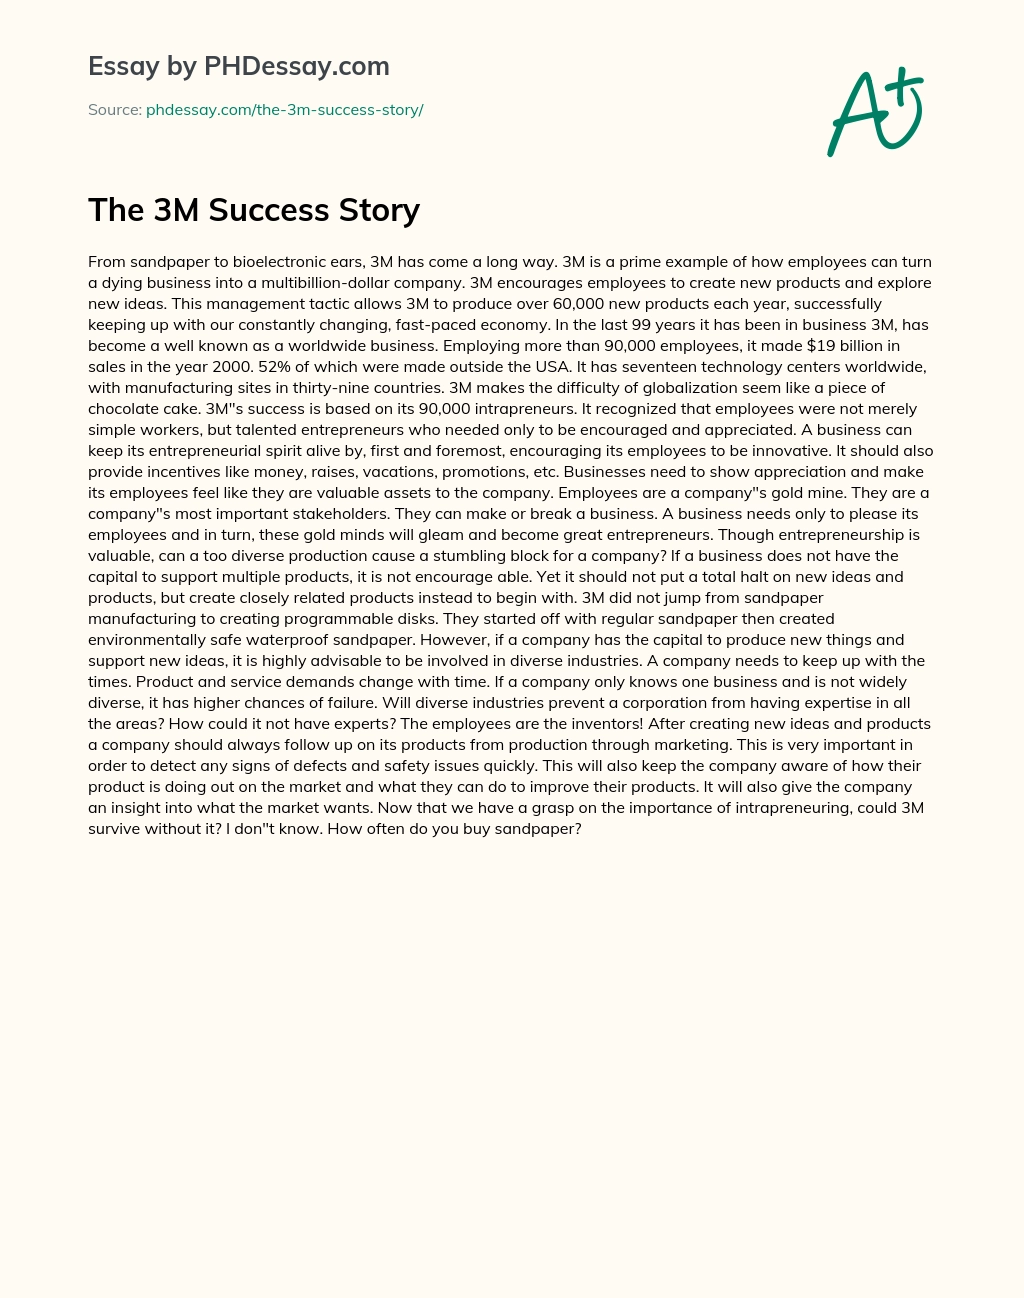 The 3M Success Story essay